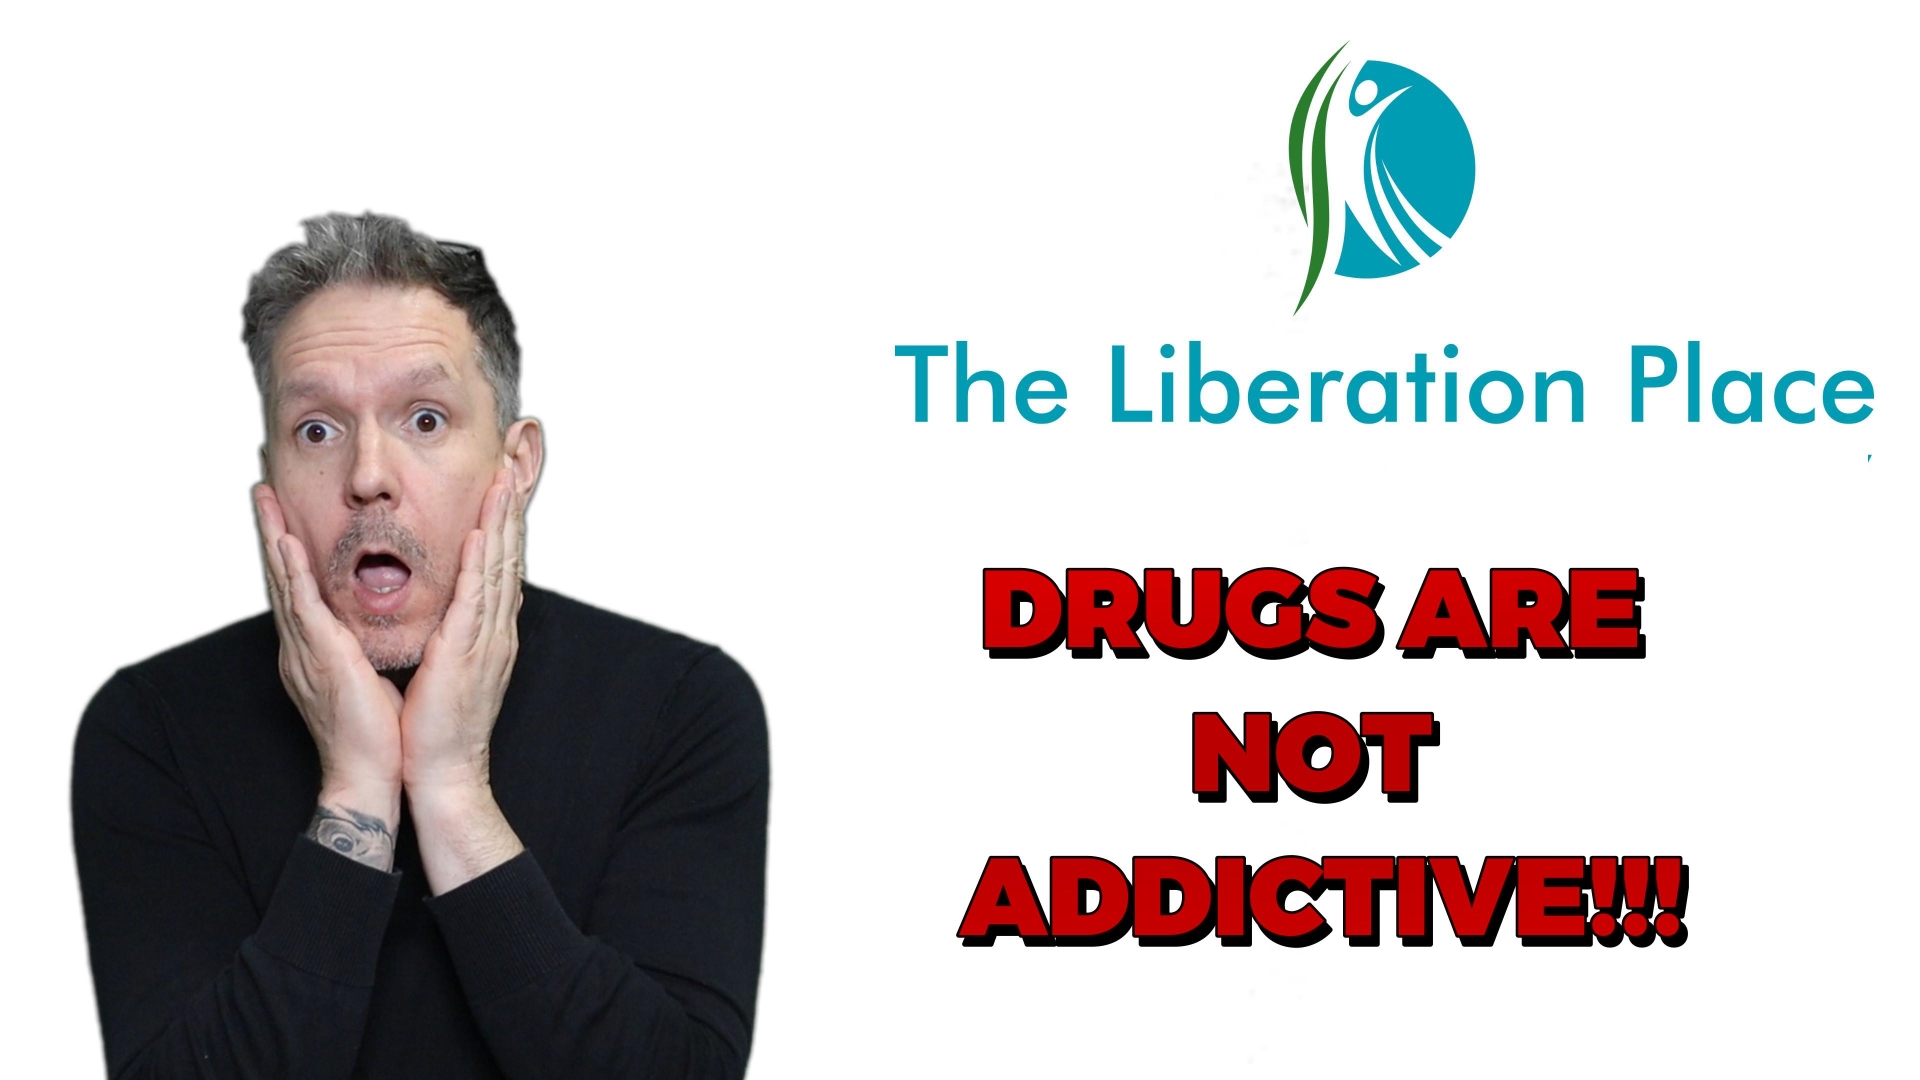 Not Addictive